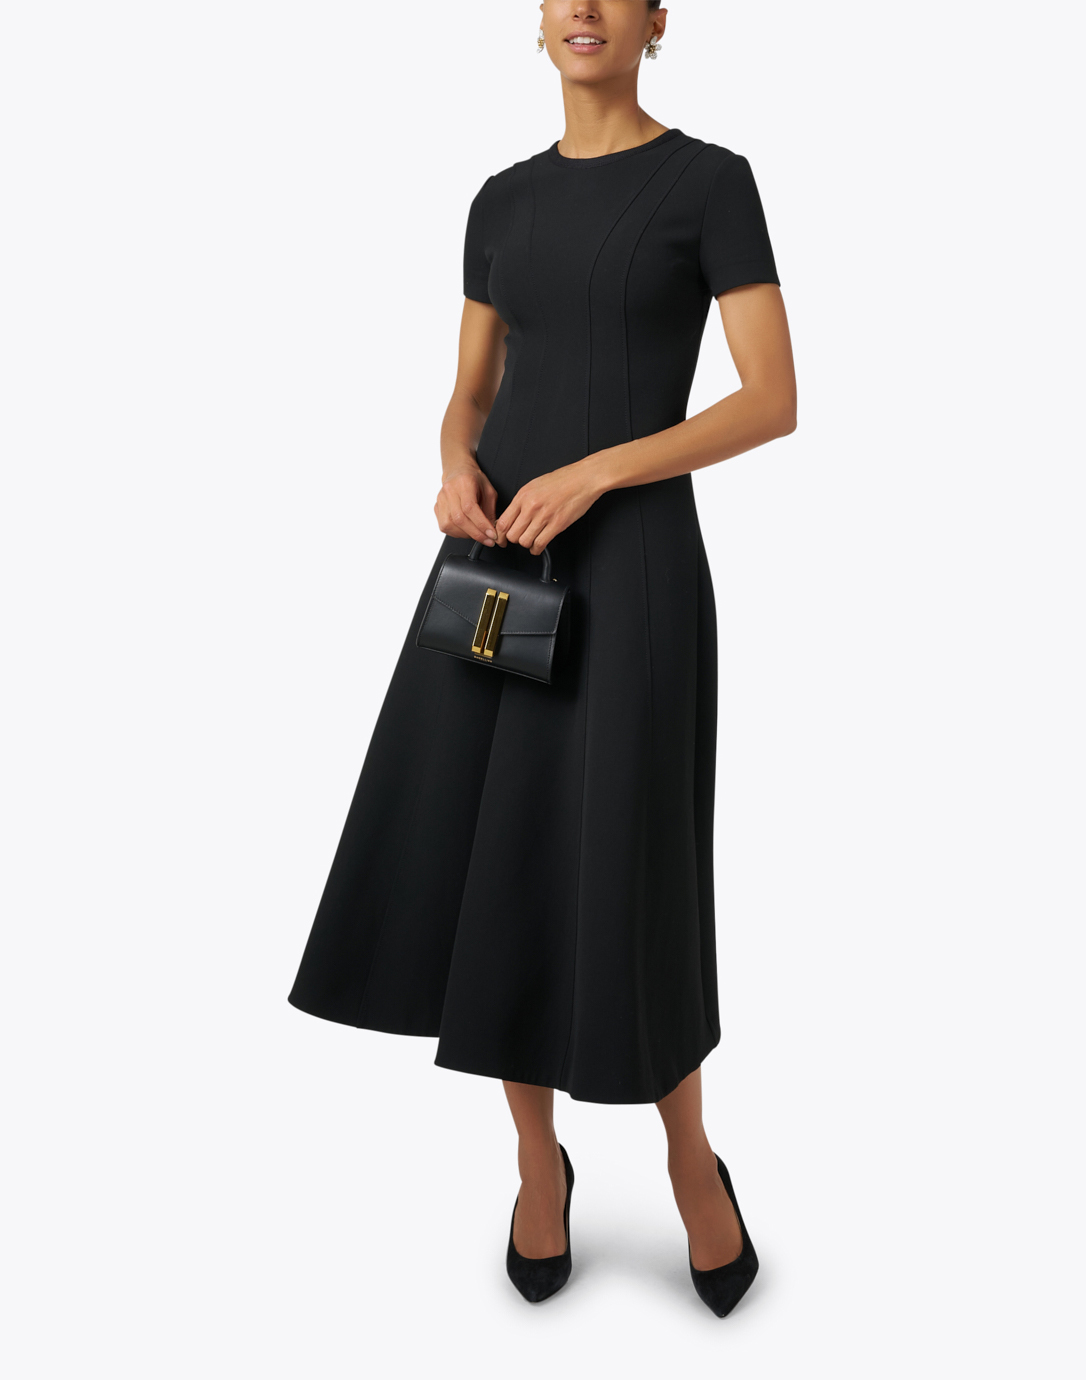 Pact Fit & Flare Midi Black Dress with Shelf Bra